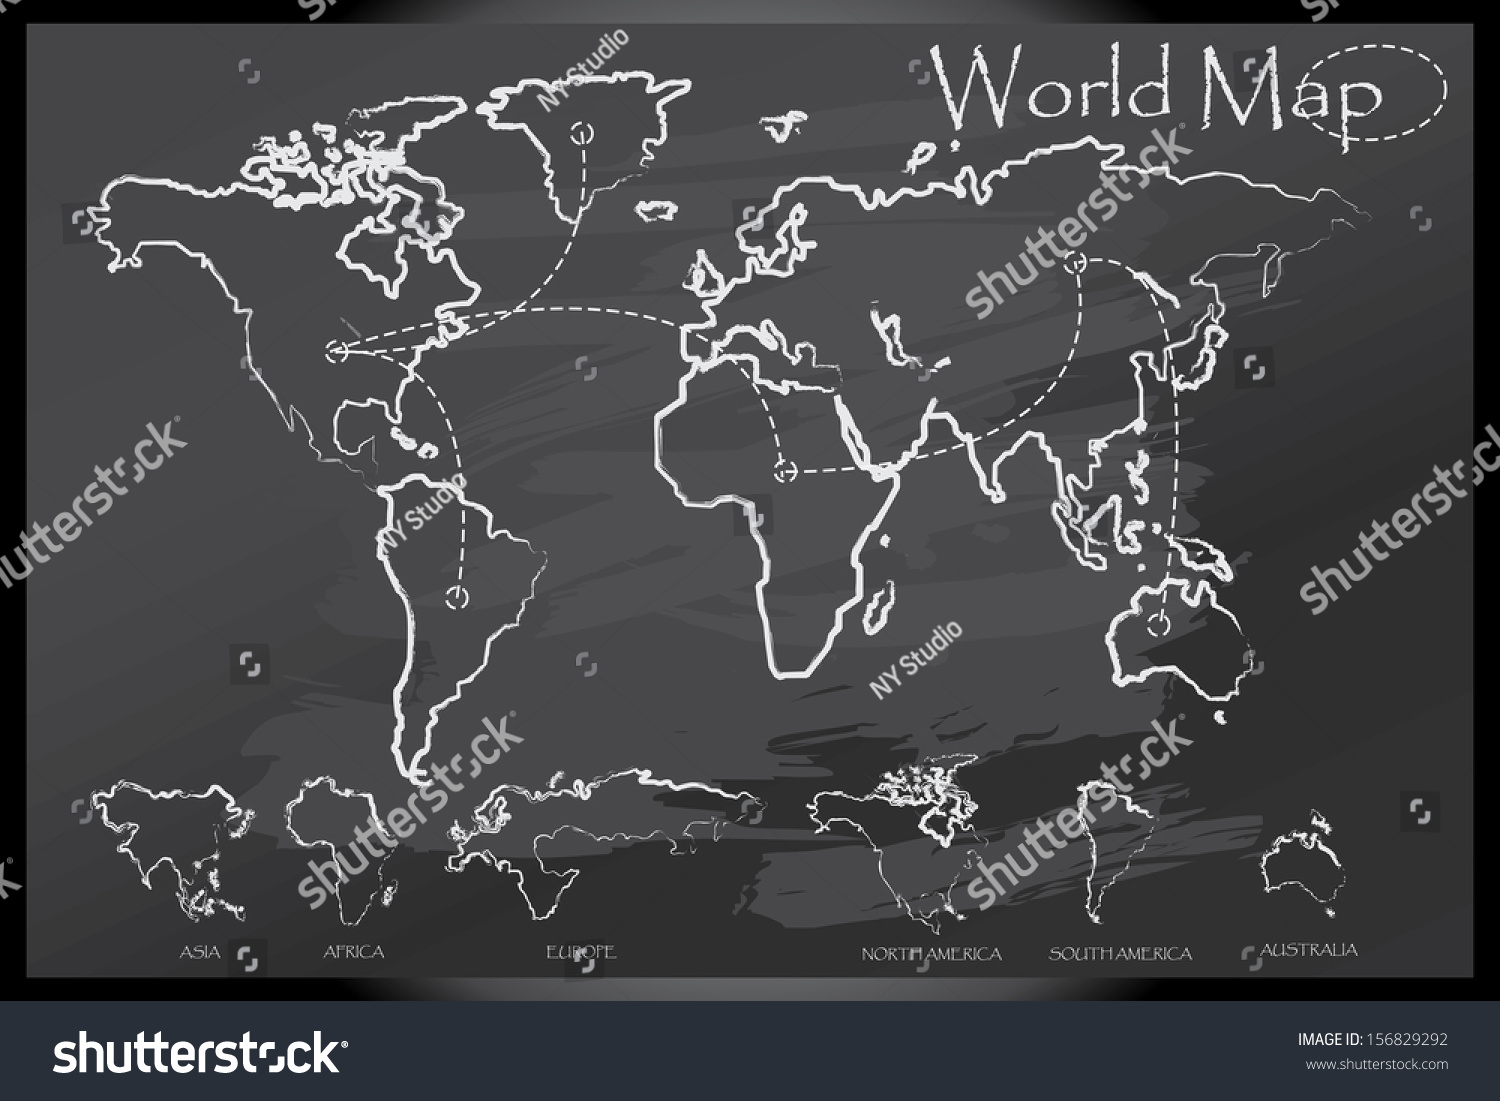 World Map Draw On Blackboard Stock Vector Royalty Free 156829292